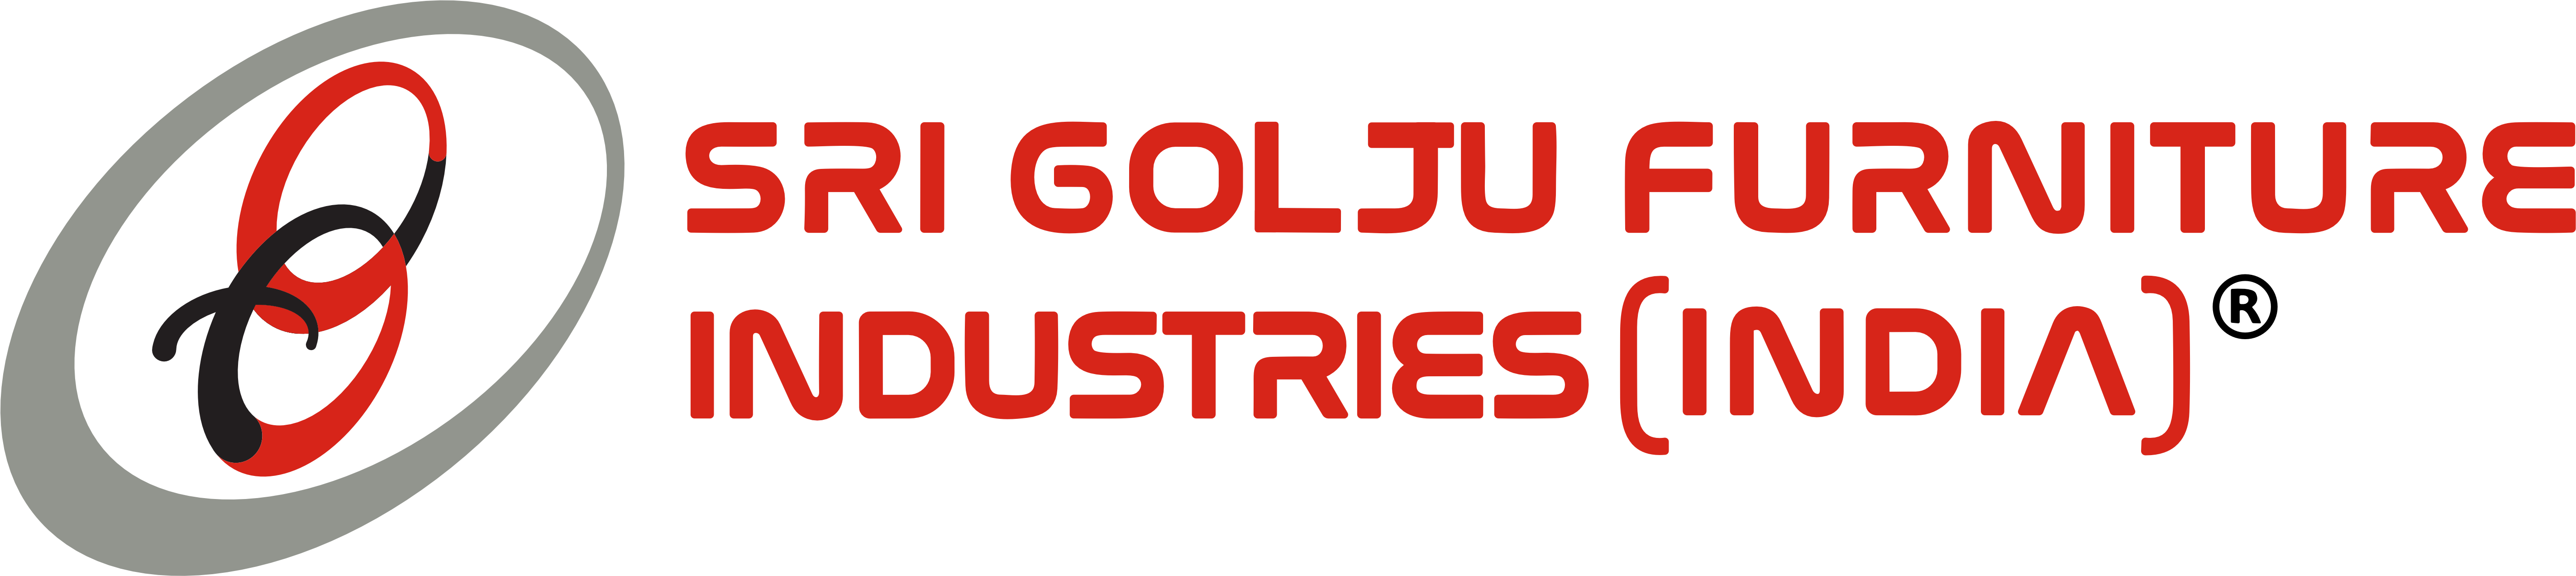 Sri Golju Furniture Industries Logo